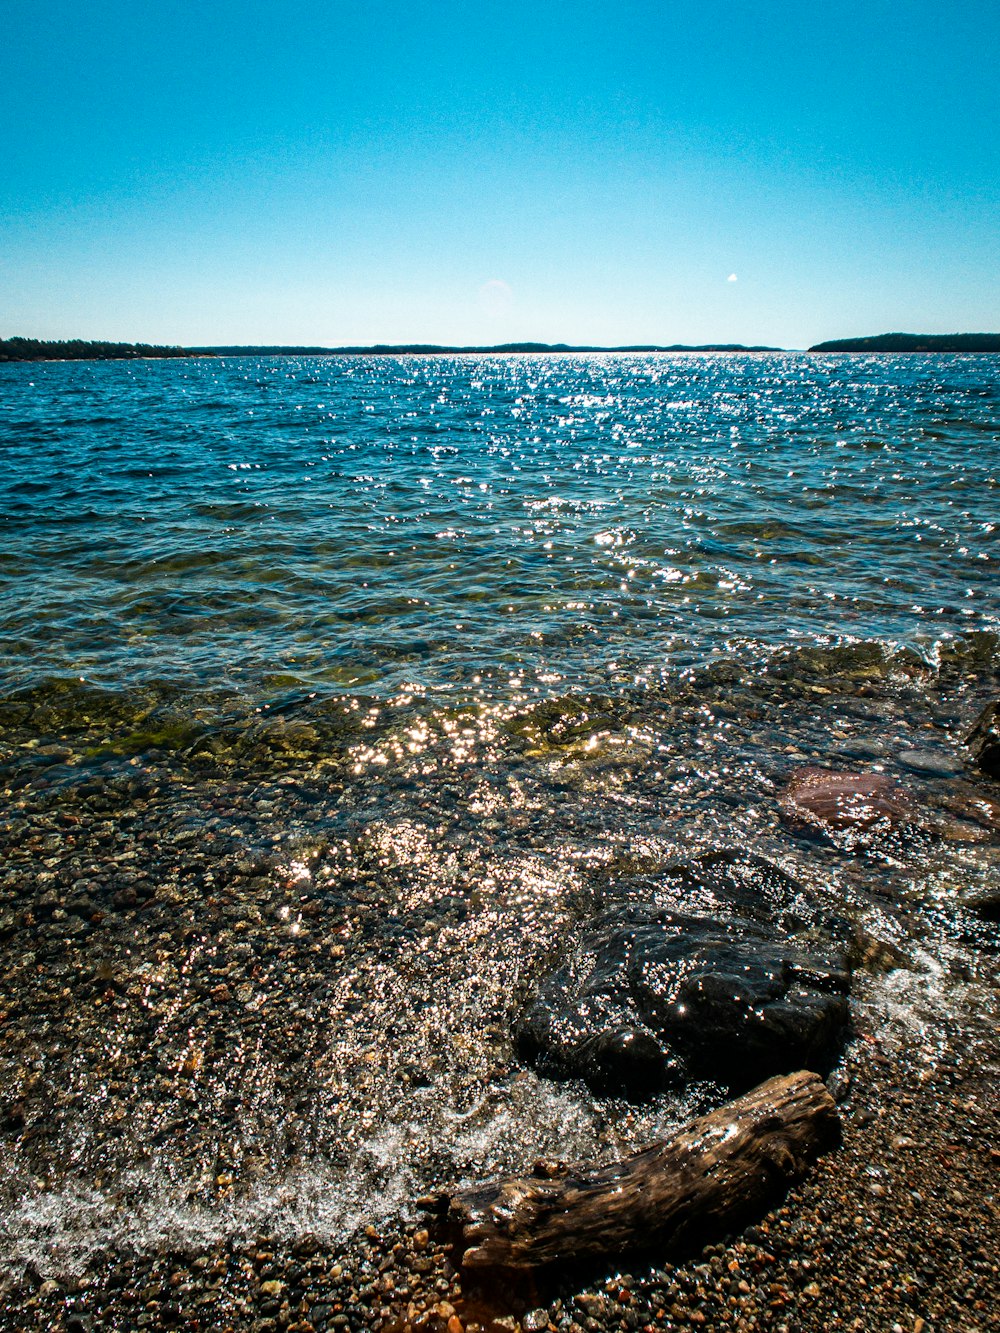 brown rocks on sea under blue sky during daytime